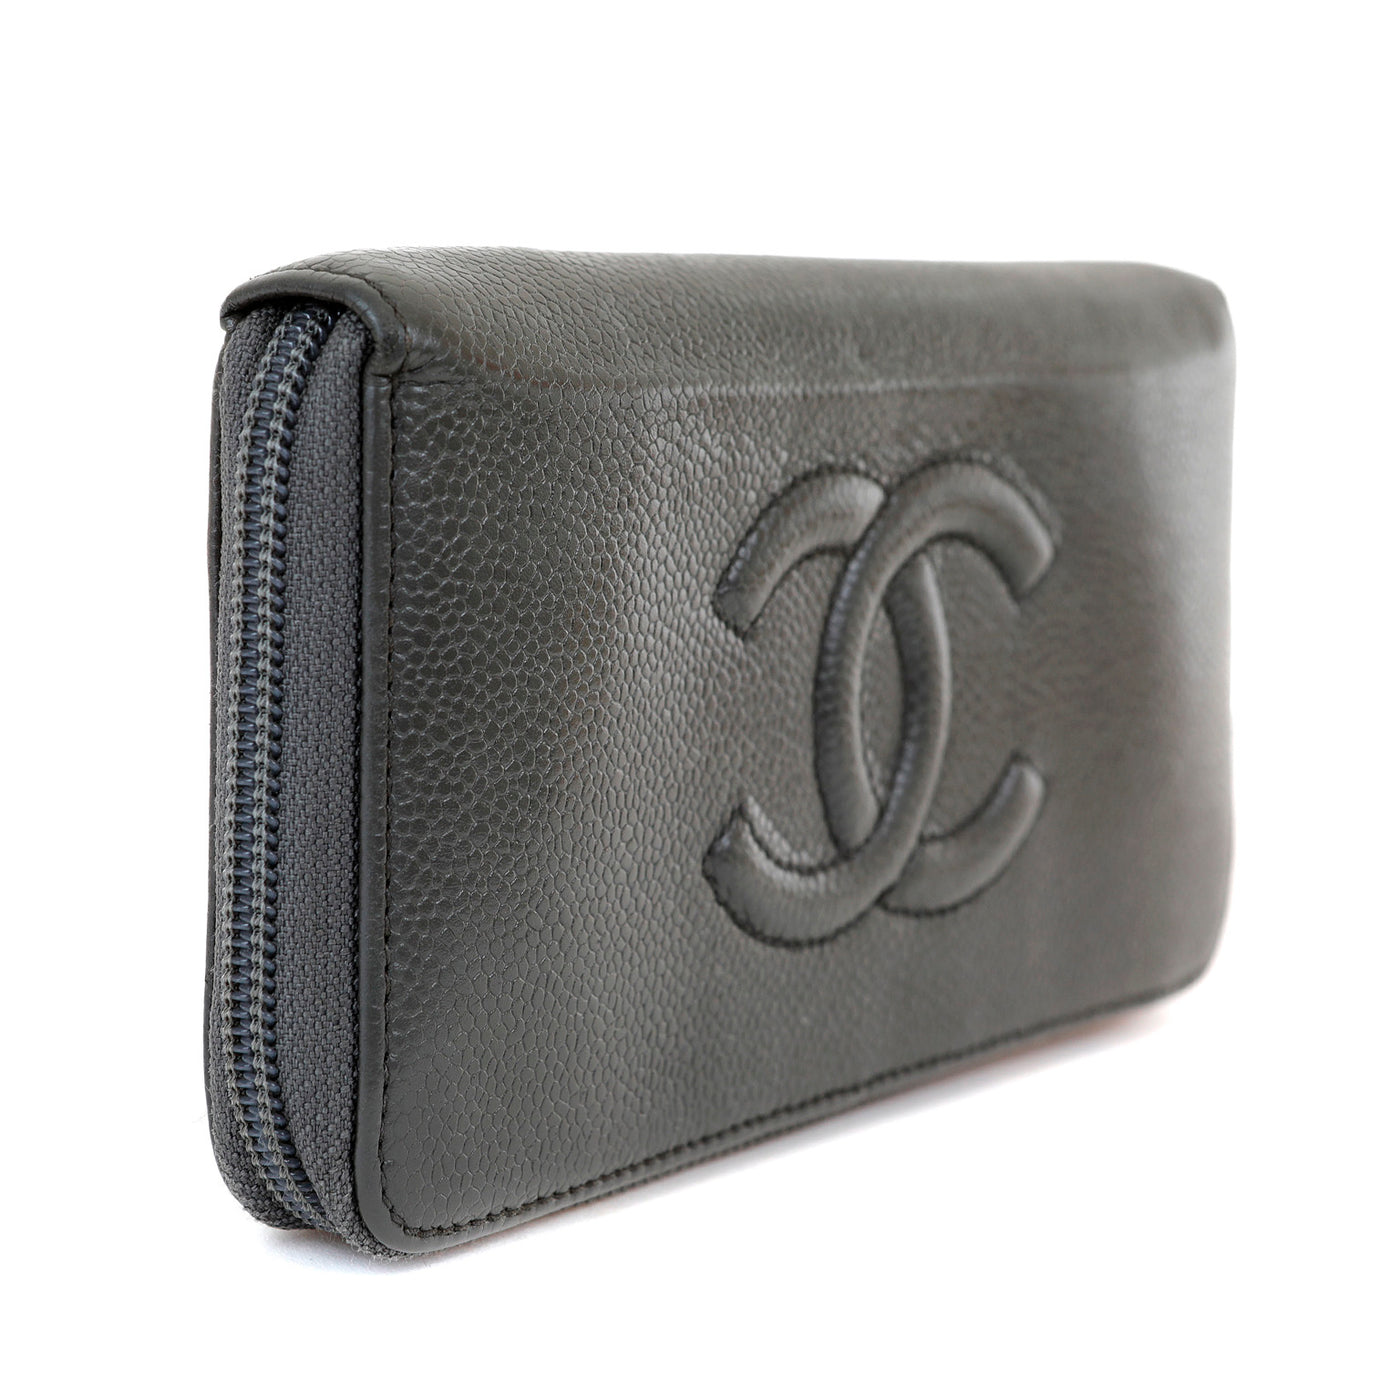 Chanel Gray Caviar wallet w/ CC